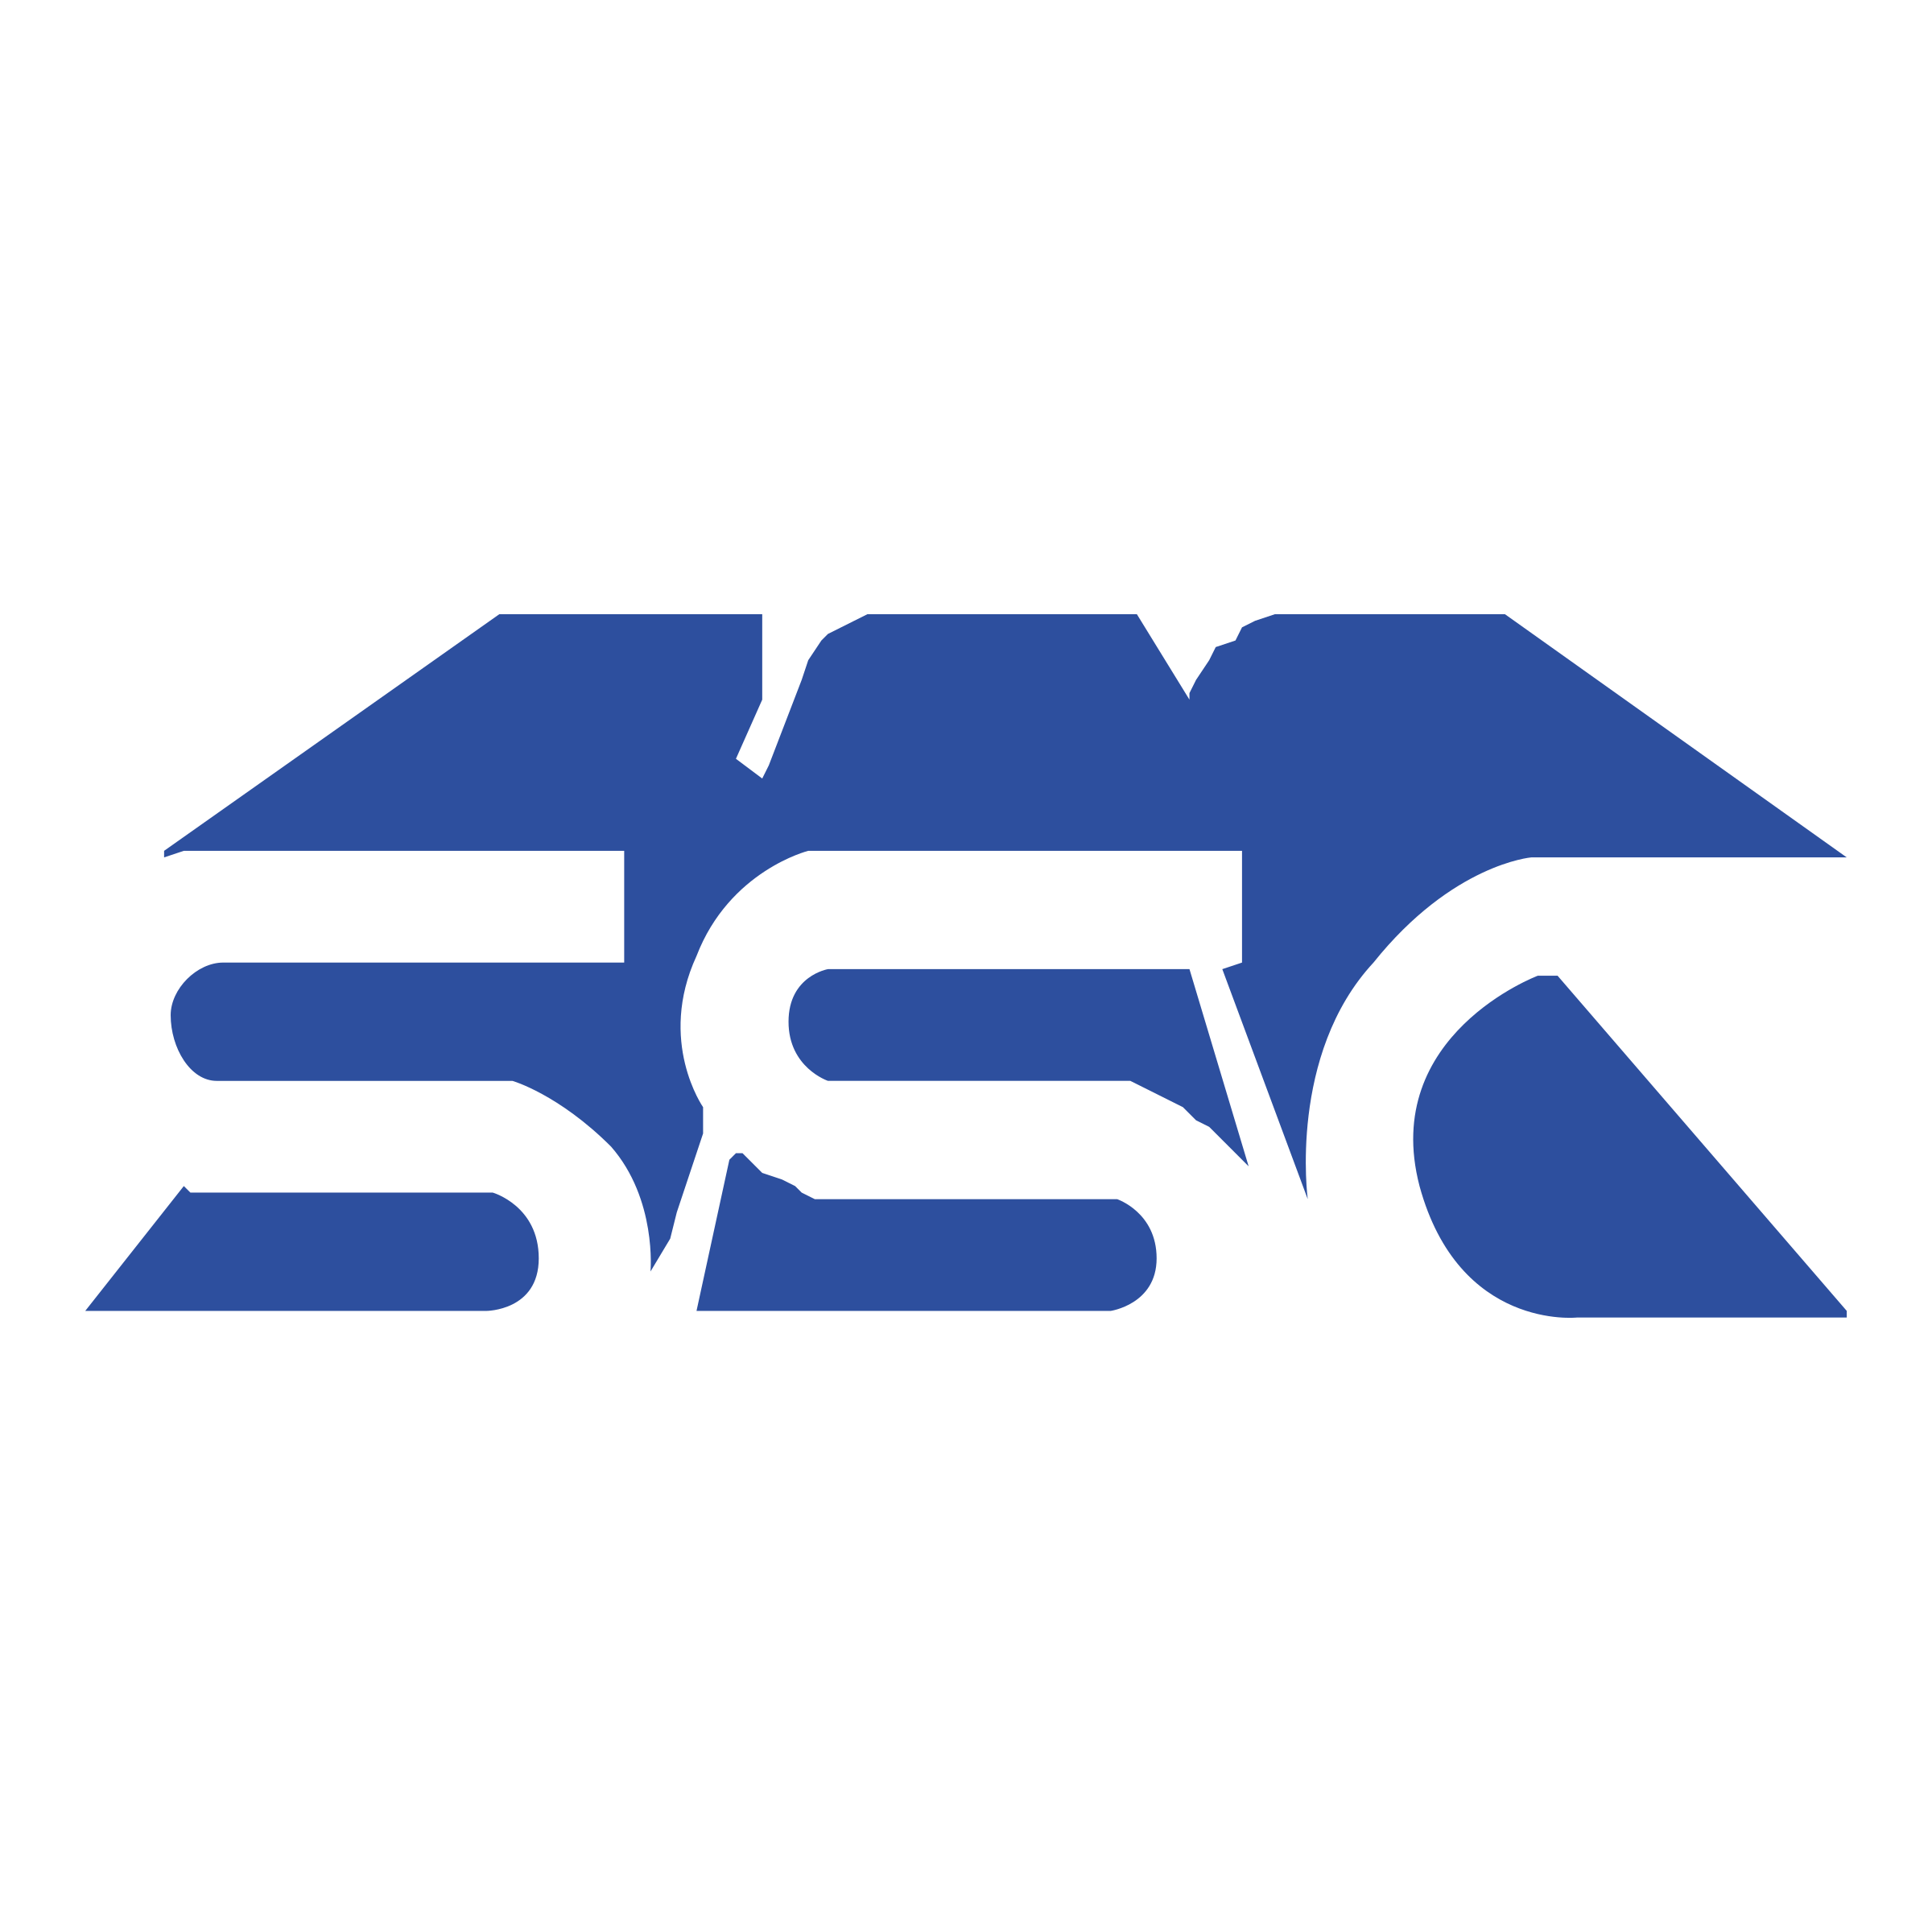 SSC Logo - SSC Logo PNG Transparent & SVG Vector - Freebie Supply